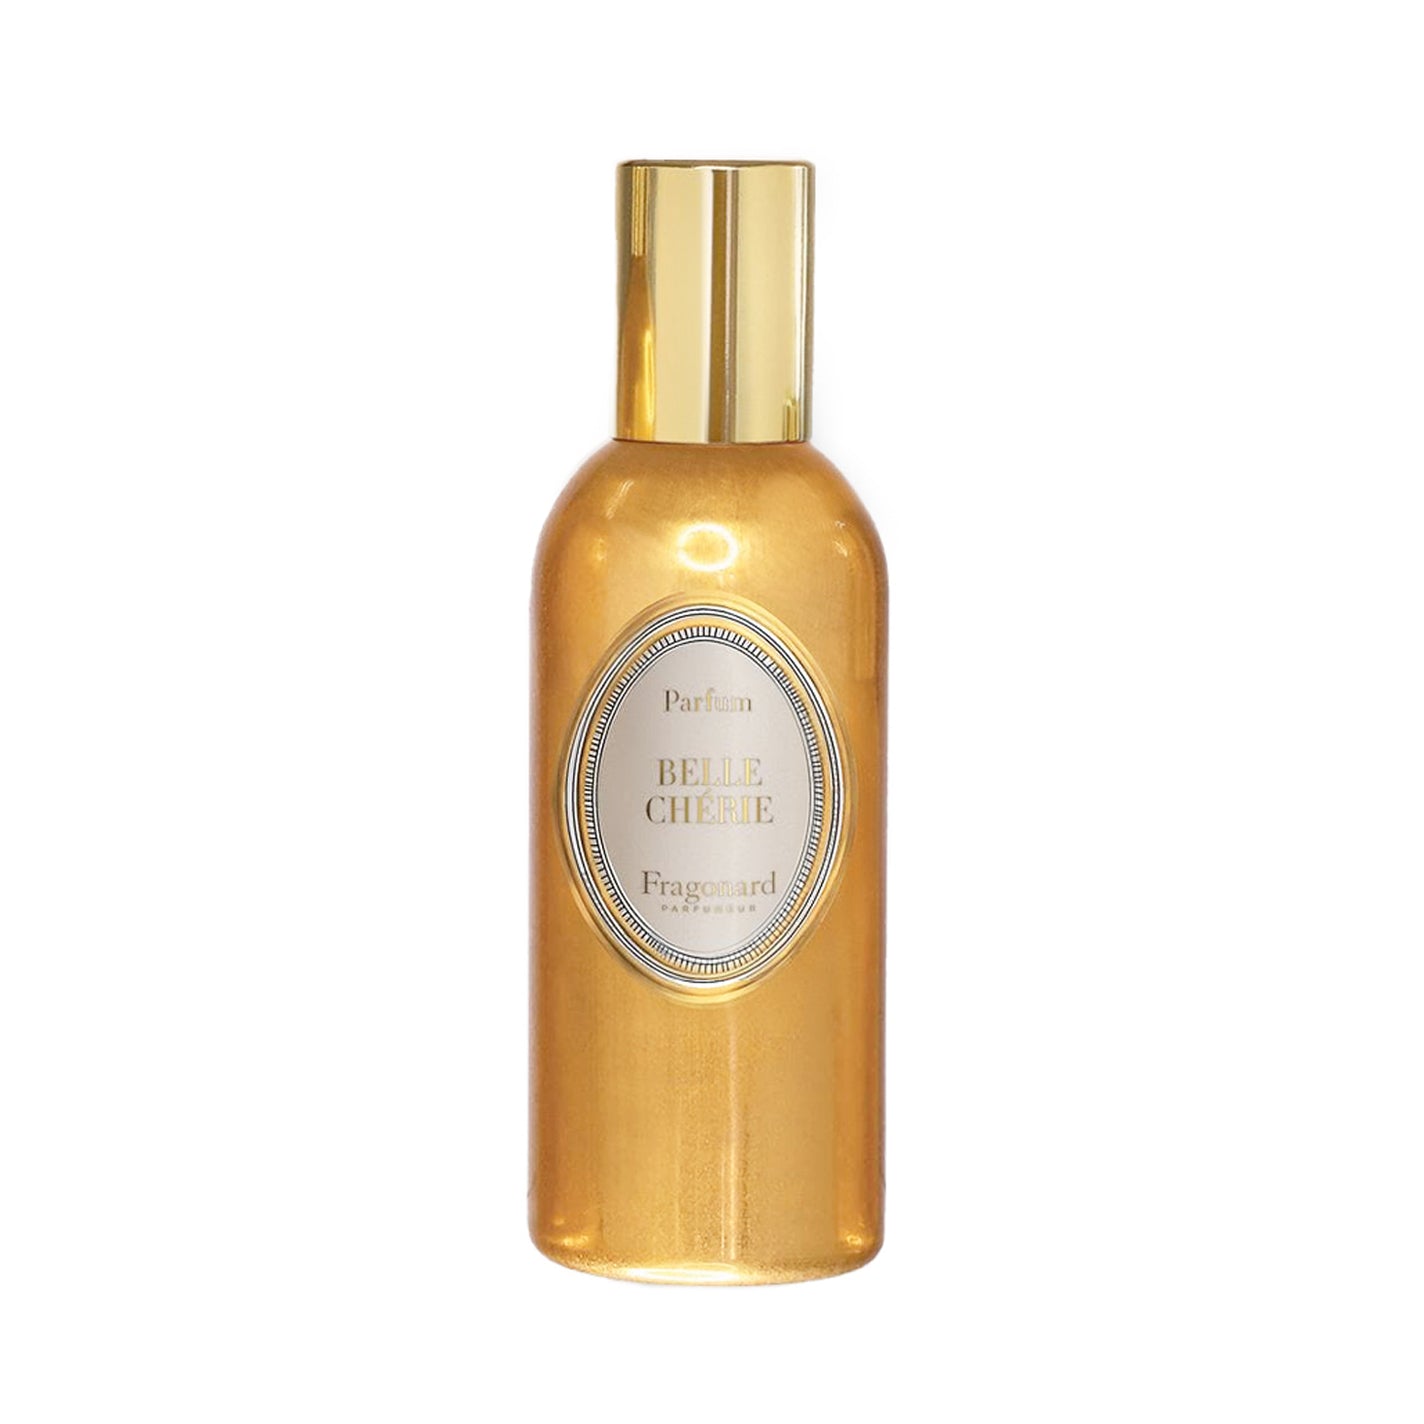 Belle Cherie Parfum 60ml by Fragonard: Official Stockist - Saison